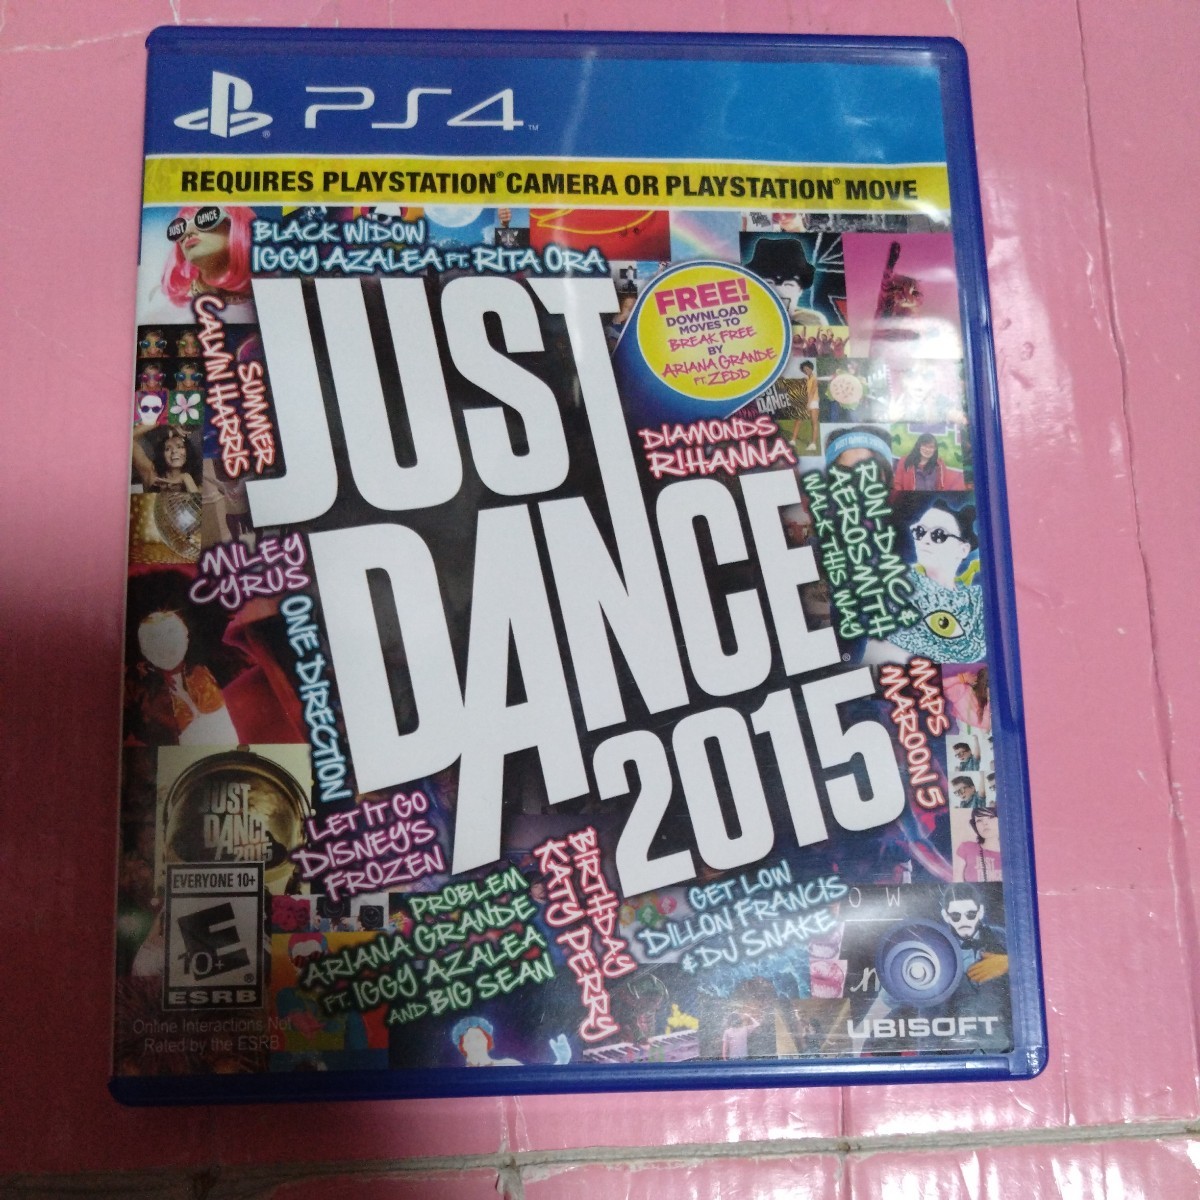 PS4 JUST DANCE 2015 (ジャストダンス2015) (北米版) (CUSA-00676) (20141021)